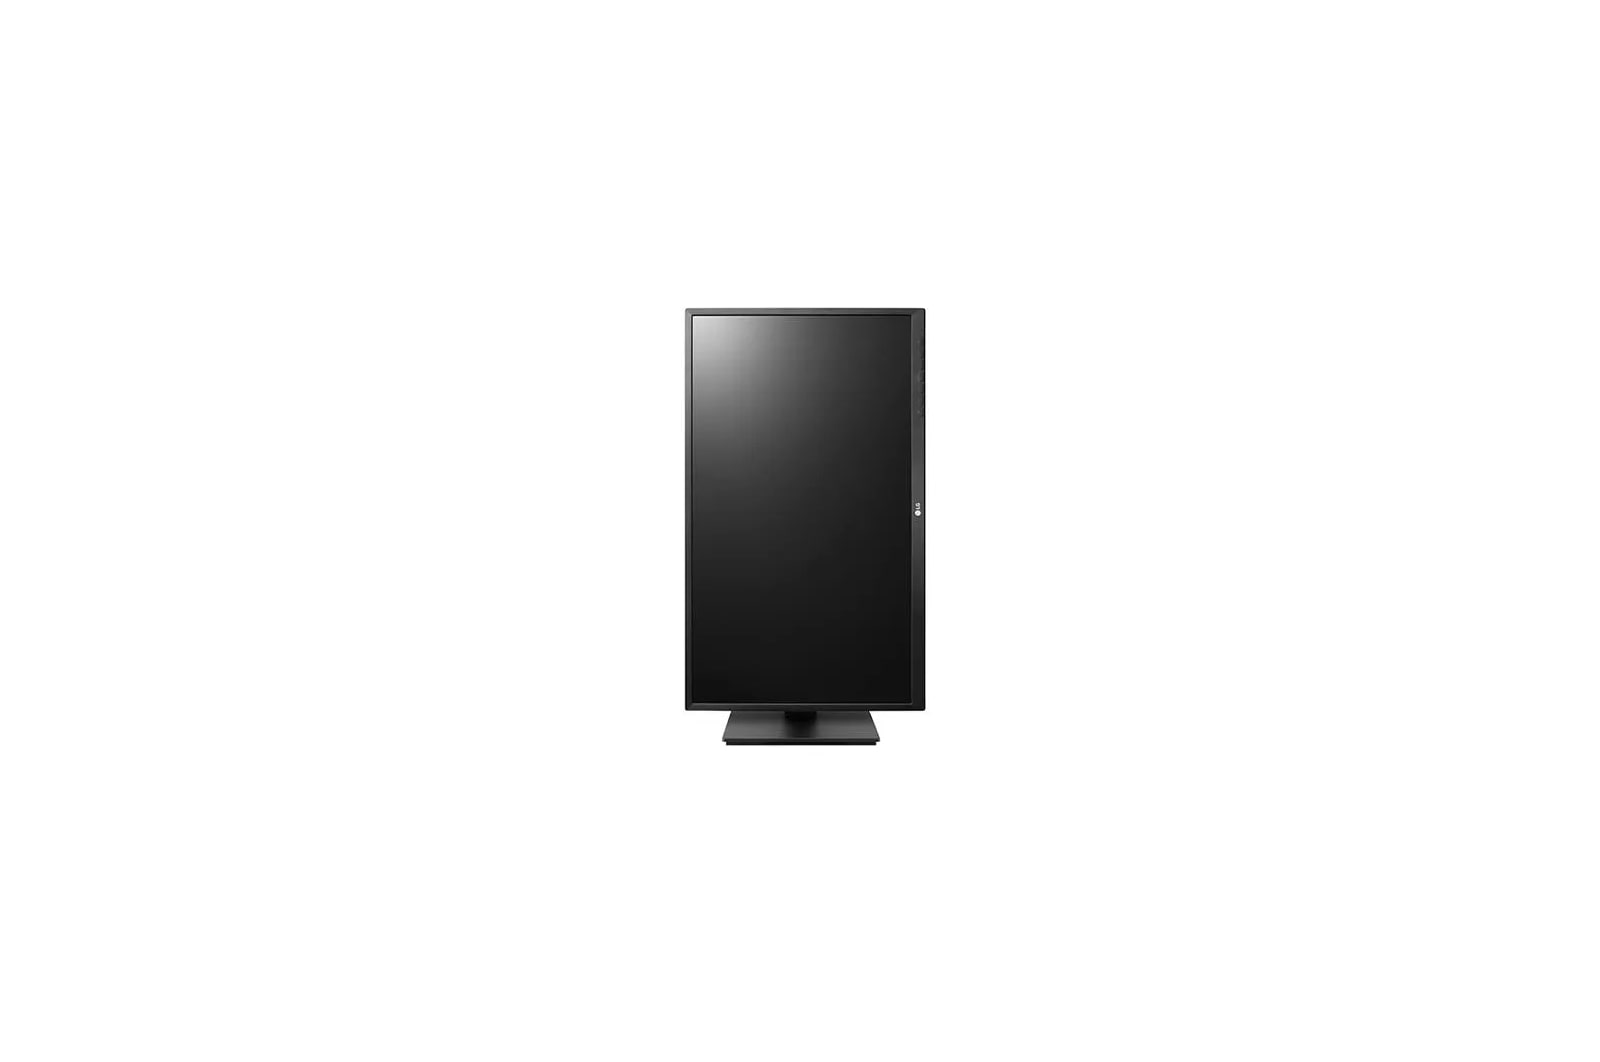  LG Monitor IPS FHD 24BK550Y-I de 24 pulgadas con caja